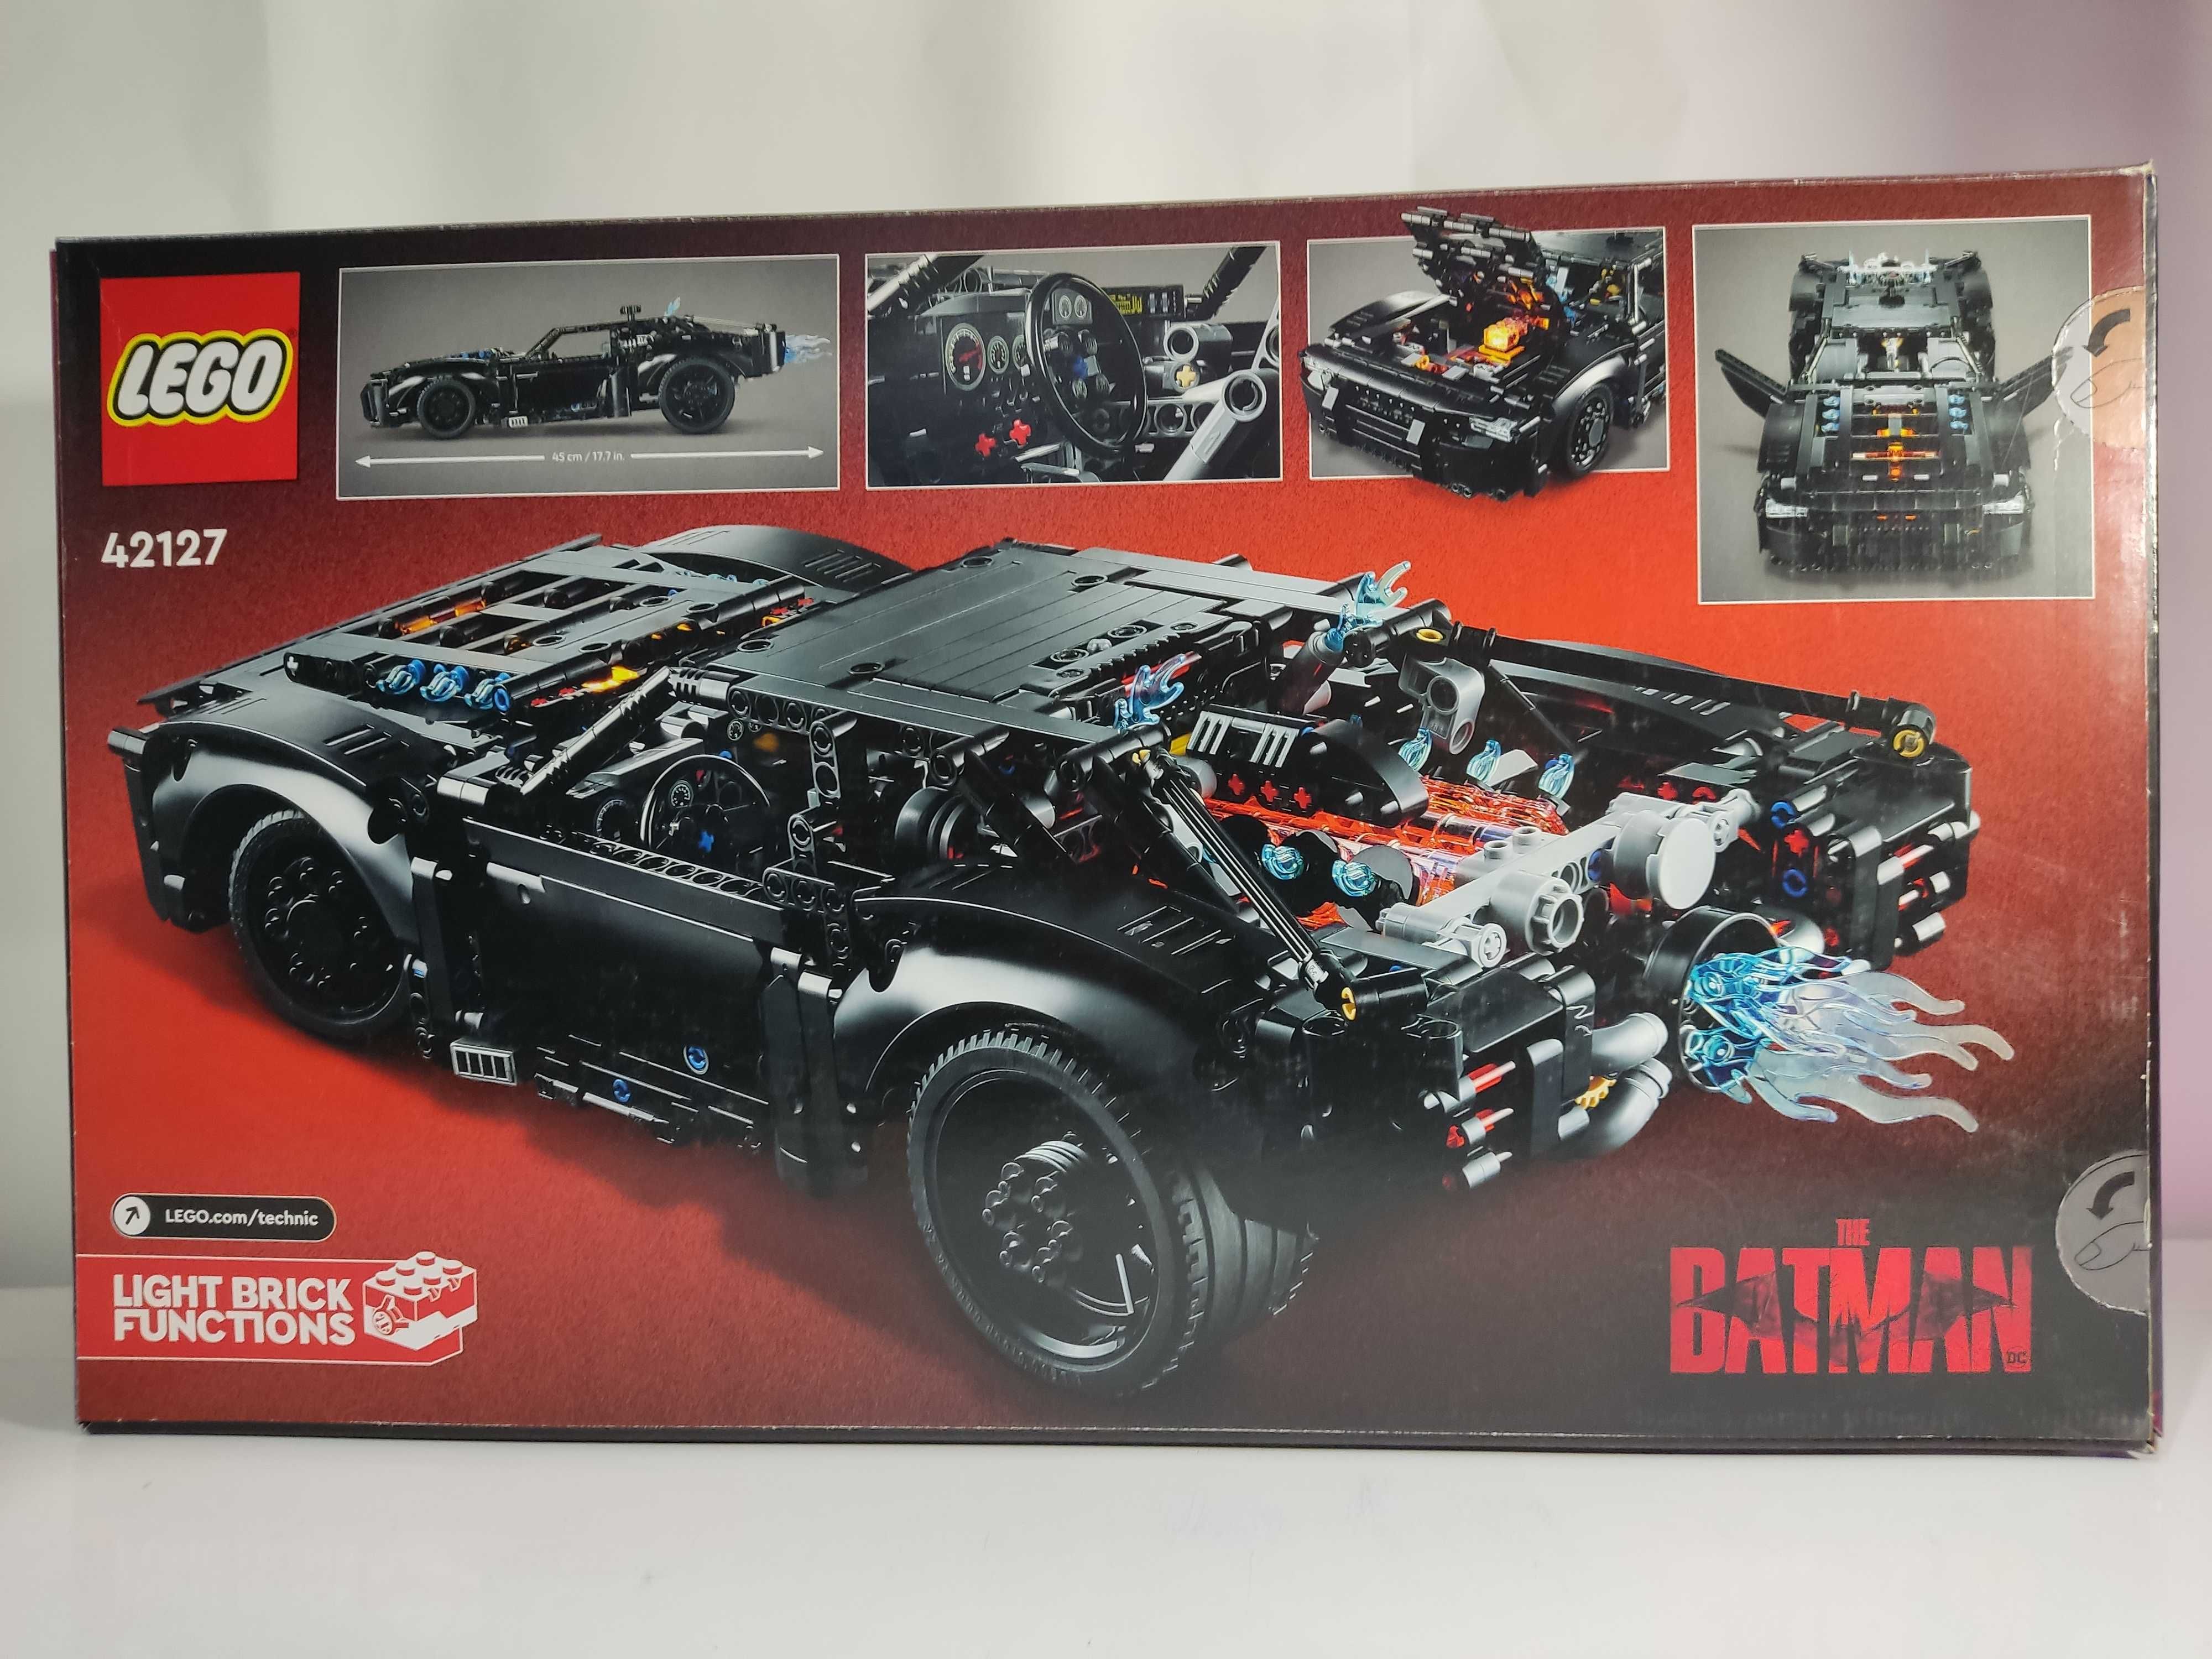 !Nowe! Lego Technic 42127 Batman - Batmobil klocki Tychy